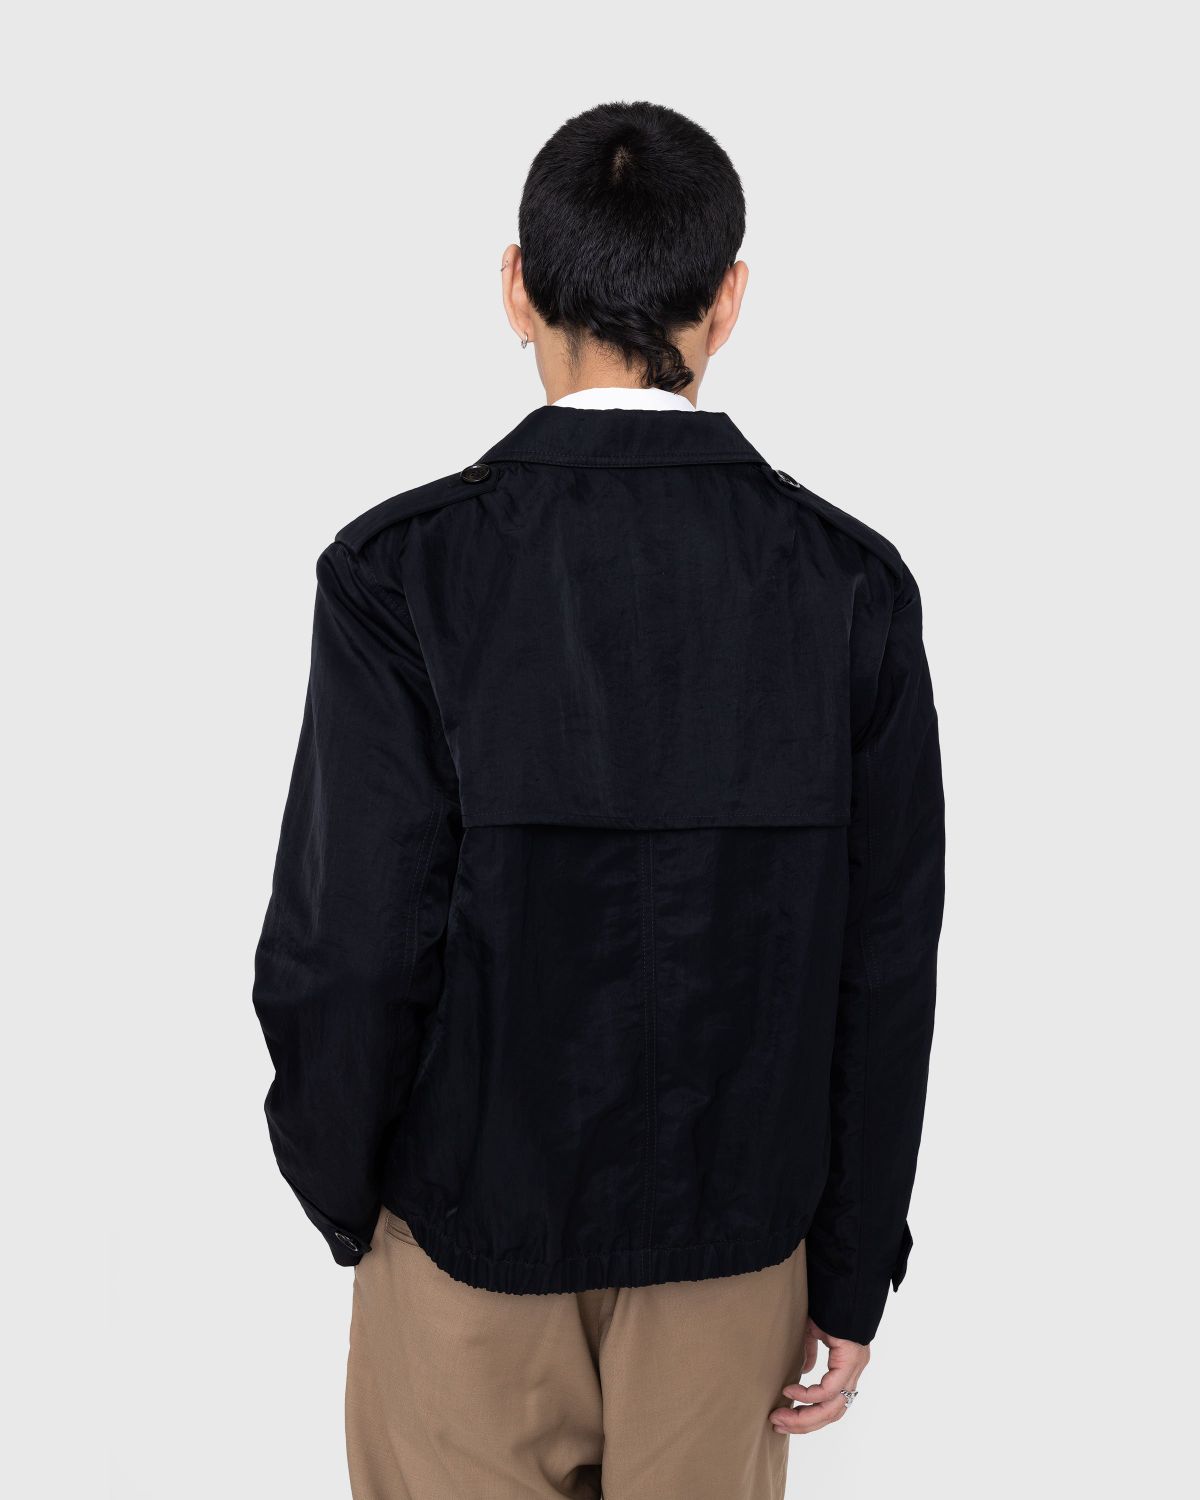 Dries van Noten – Vallow Jacket Black - Outerwear - Black - Image 3